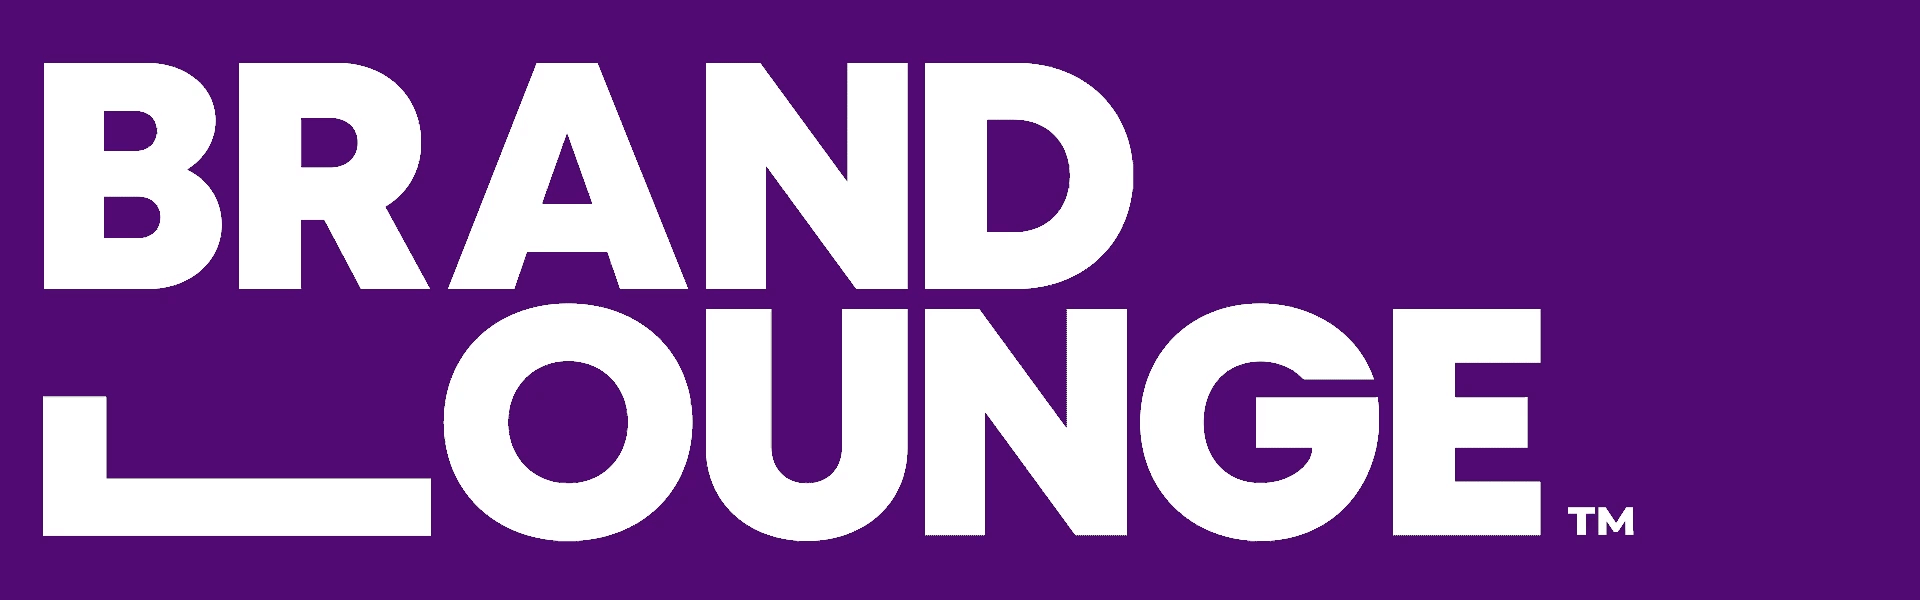 BL-WS_purple-bg